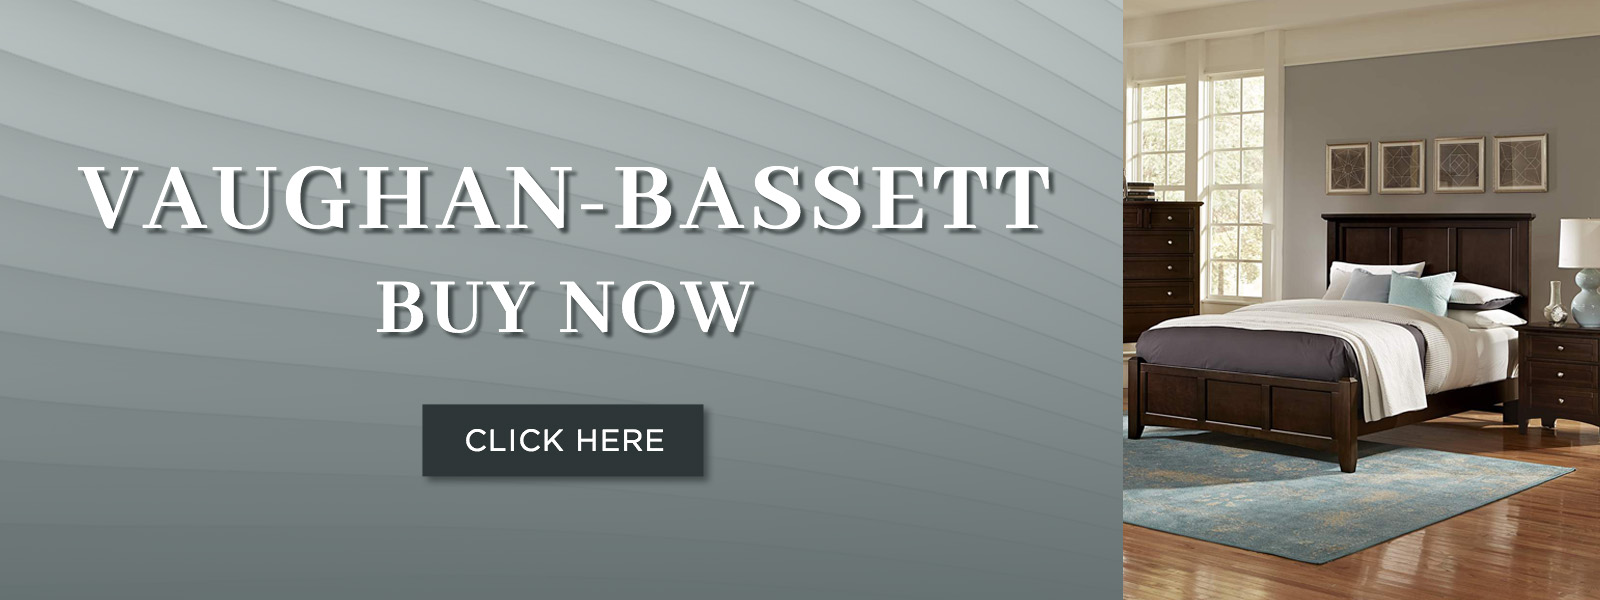 Vaughan-Bassett Ad